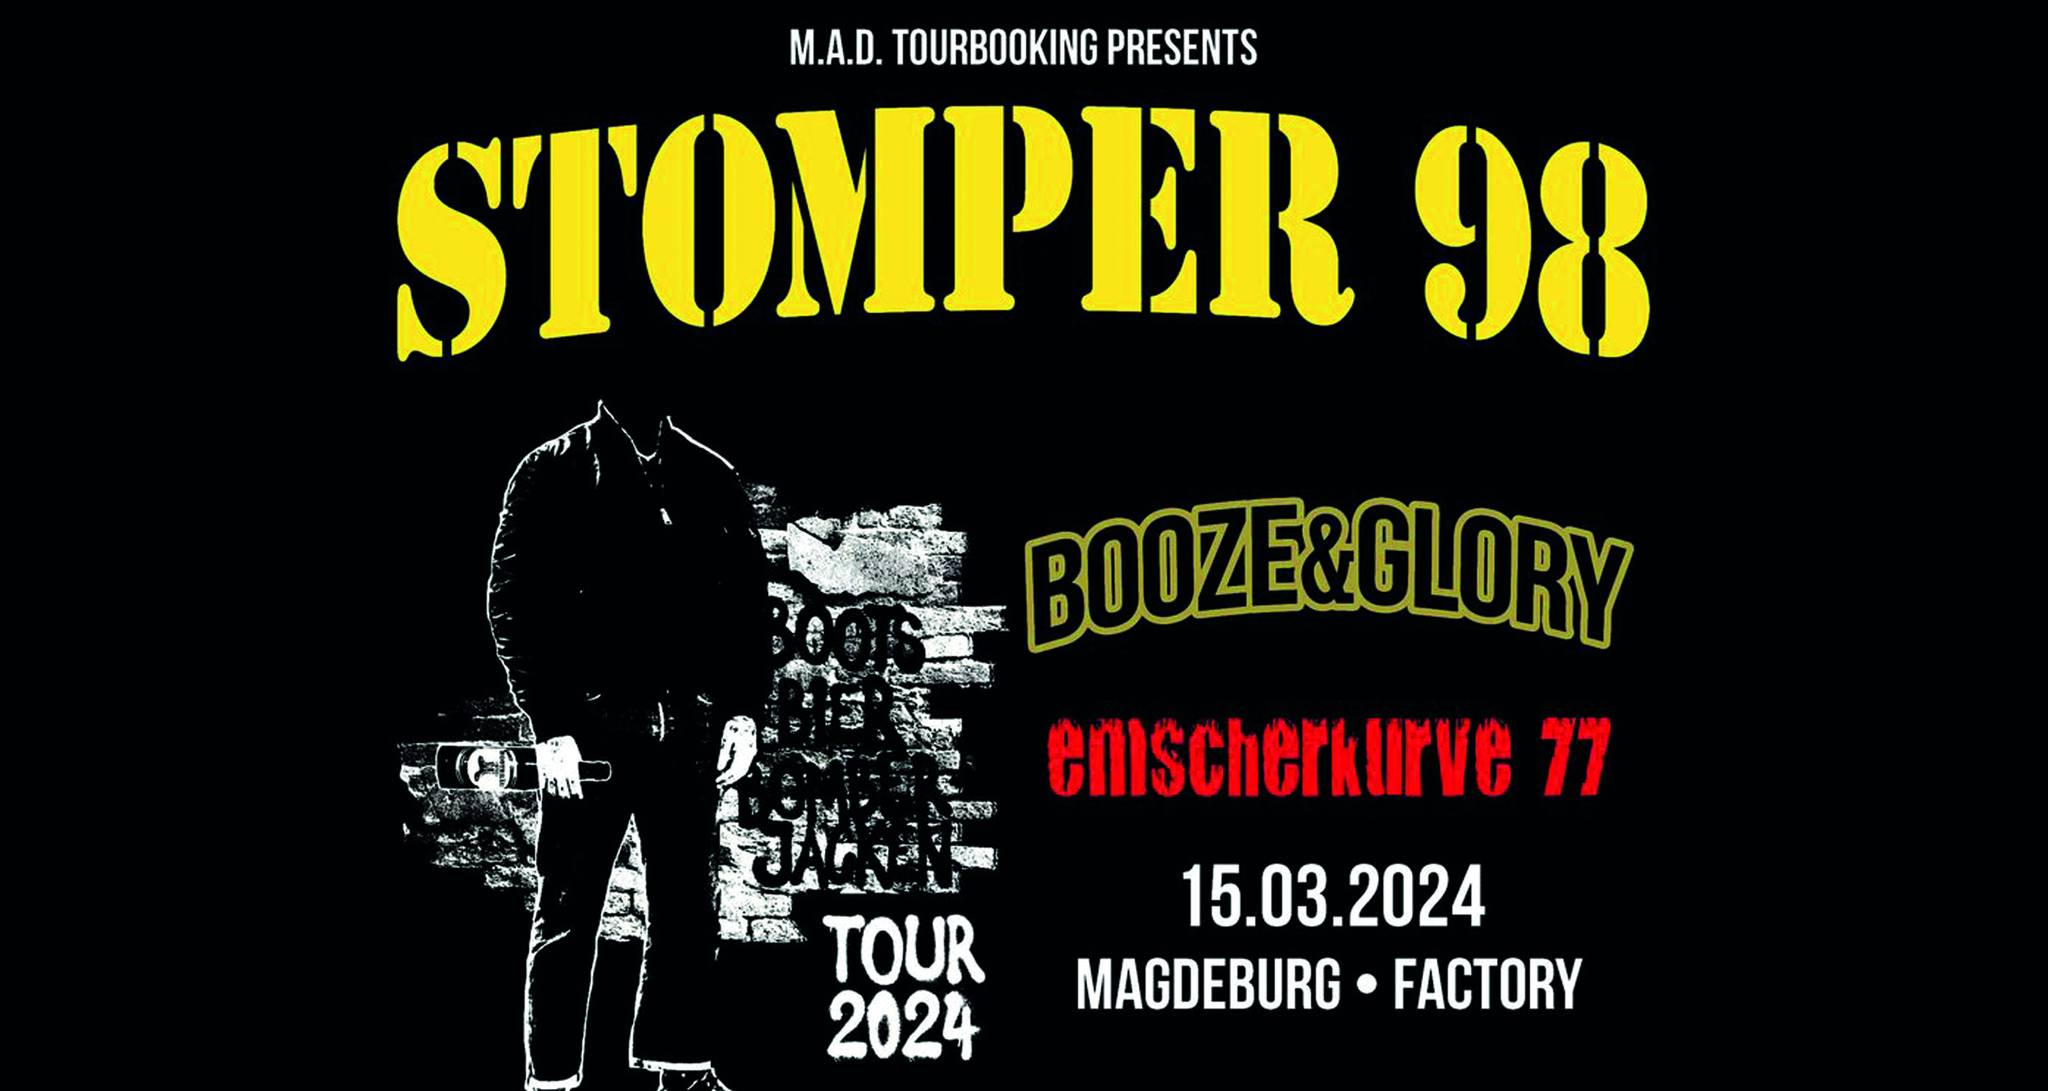 STOMPER 98 // Tour 2024 // Special Guest: Booze & Glory, Emscherkurve 77 // 15.03.2024